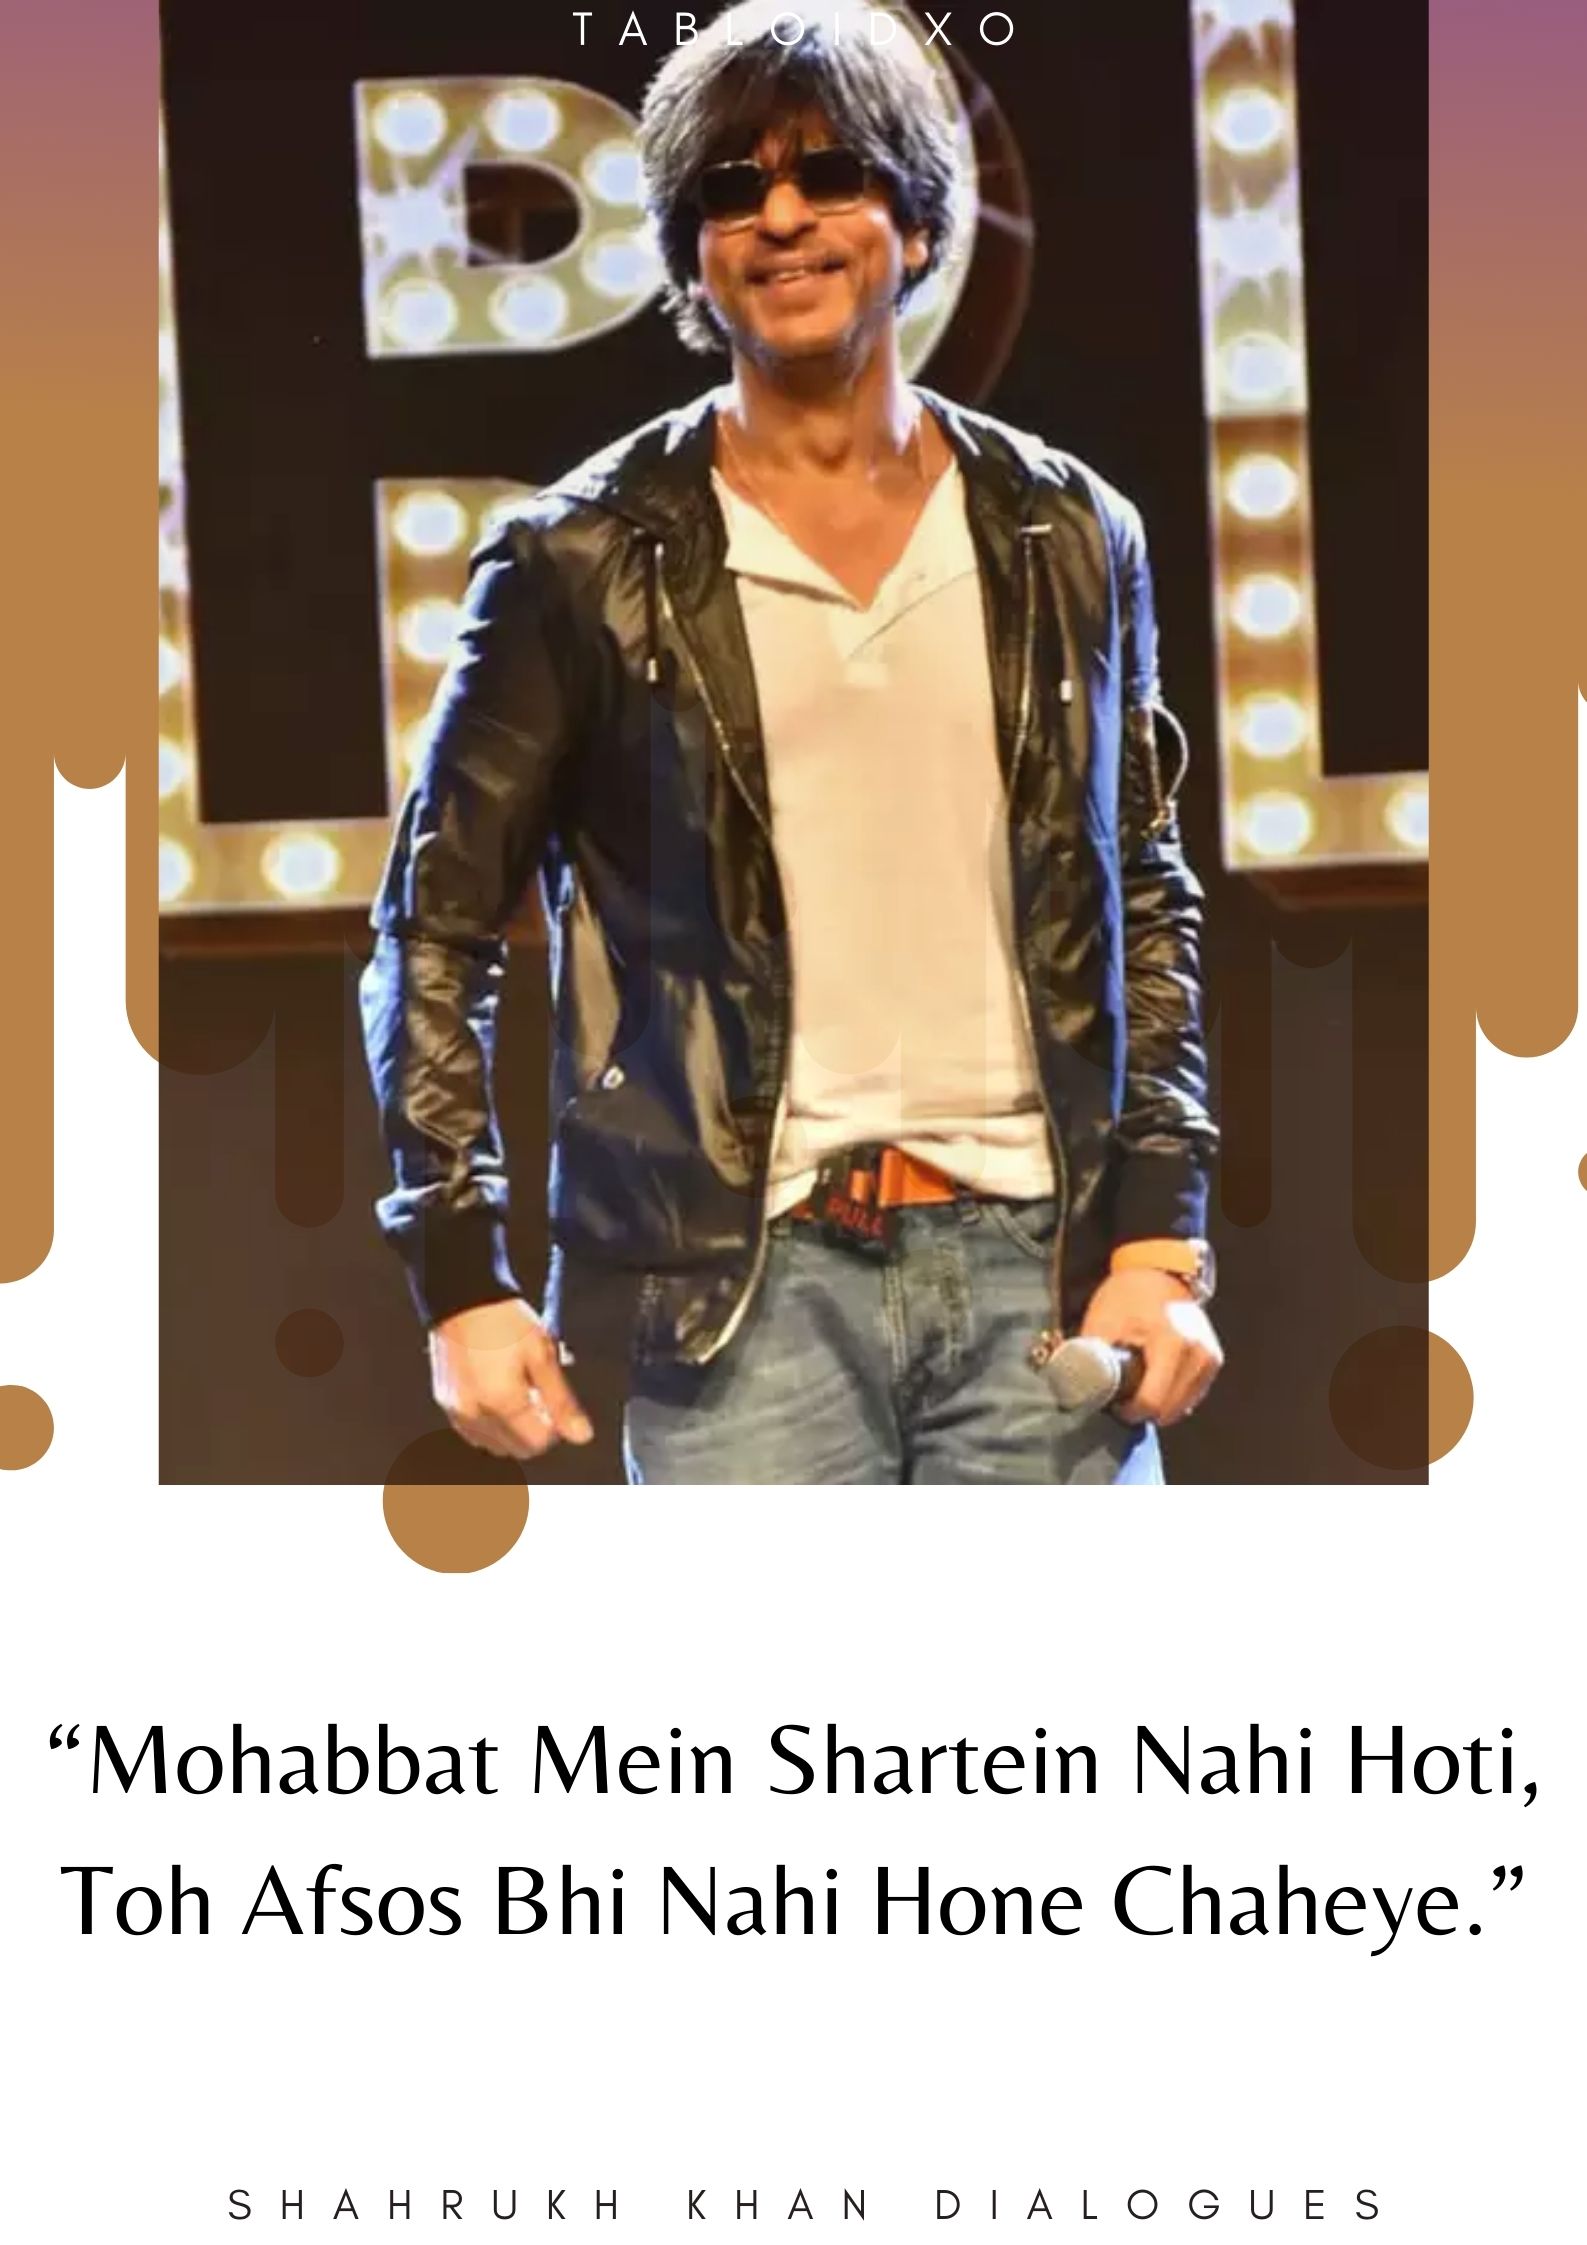 Shahrukh khan dialogues